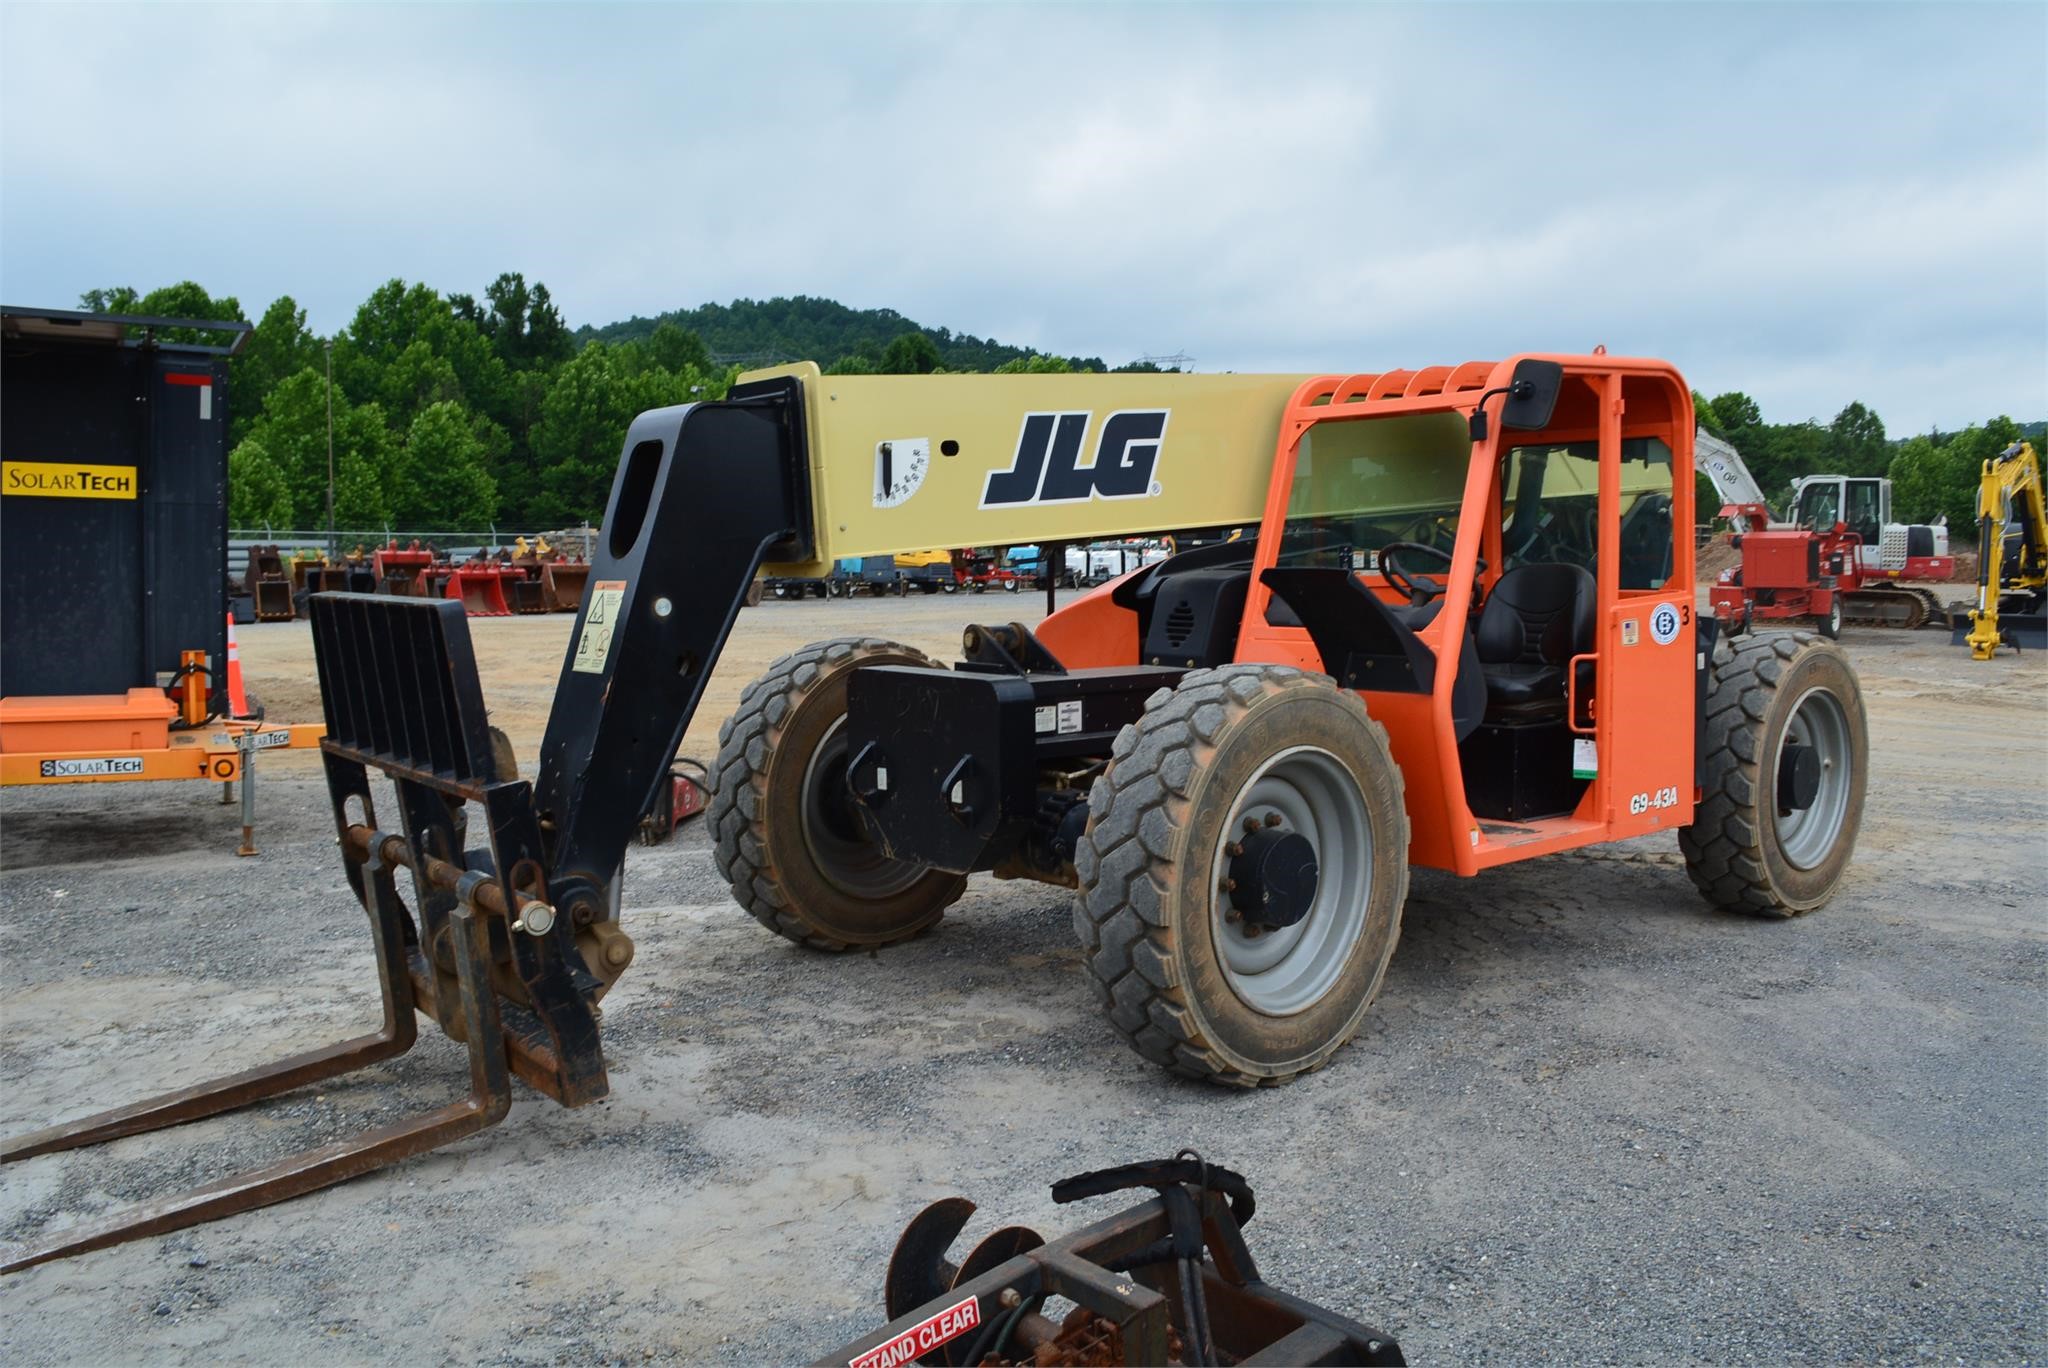 2015 Jlg G9 43a For Sale In Lynchburg Virginia Liftstoday Com